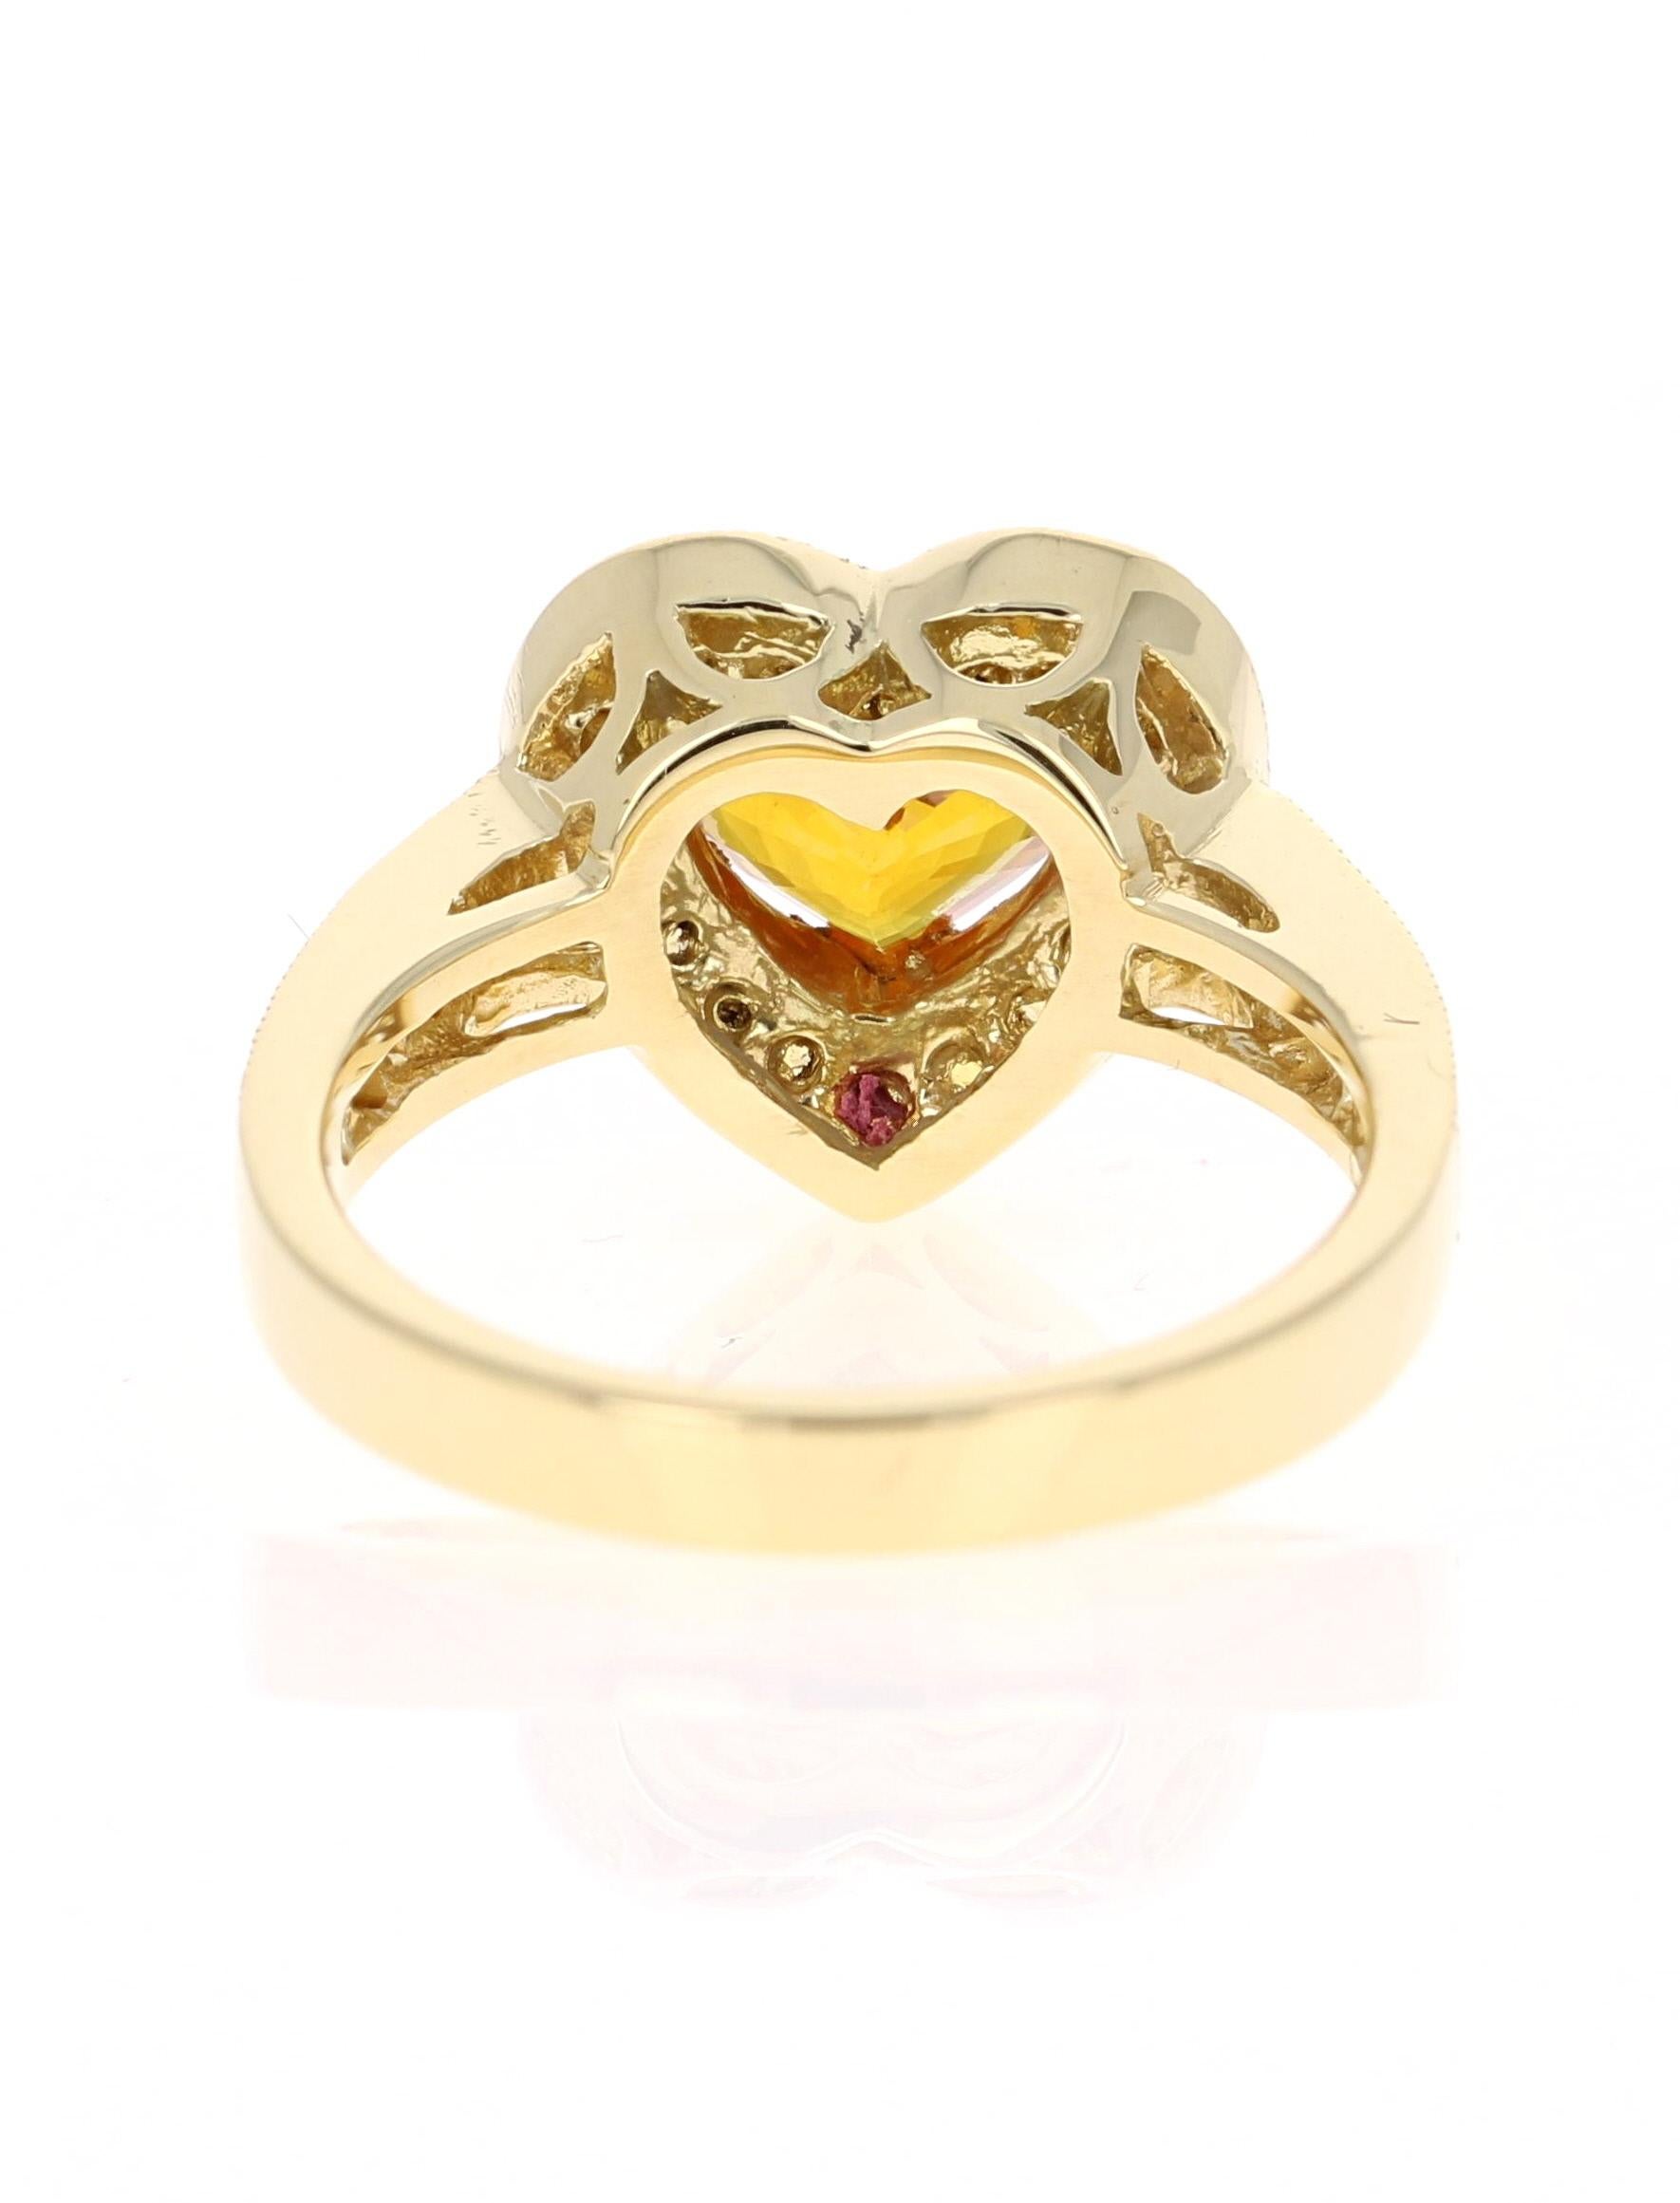 Round Cut 2.68 Carat Orange Sapphire Diamond Engagement 18 Karat Yellow Gold Ring